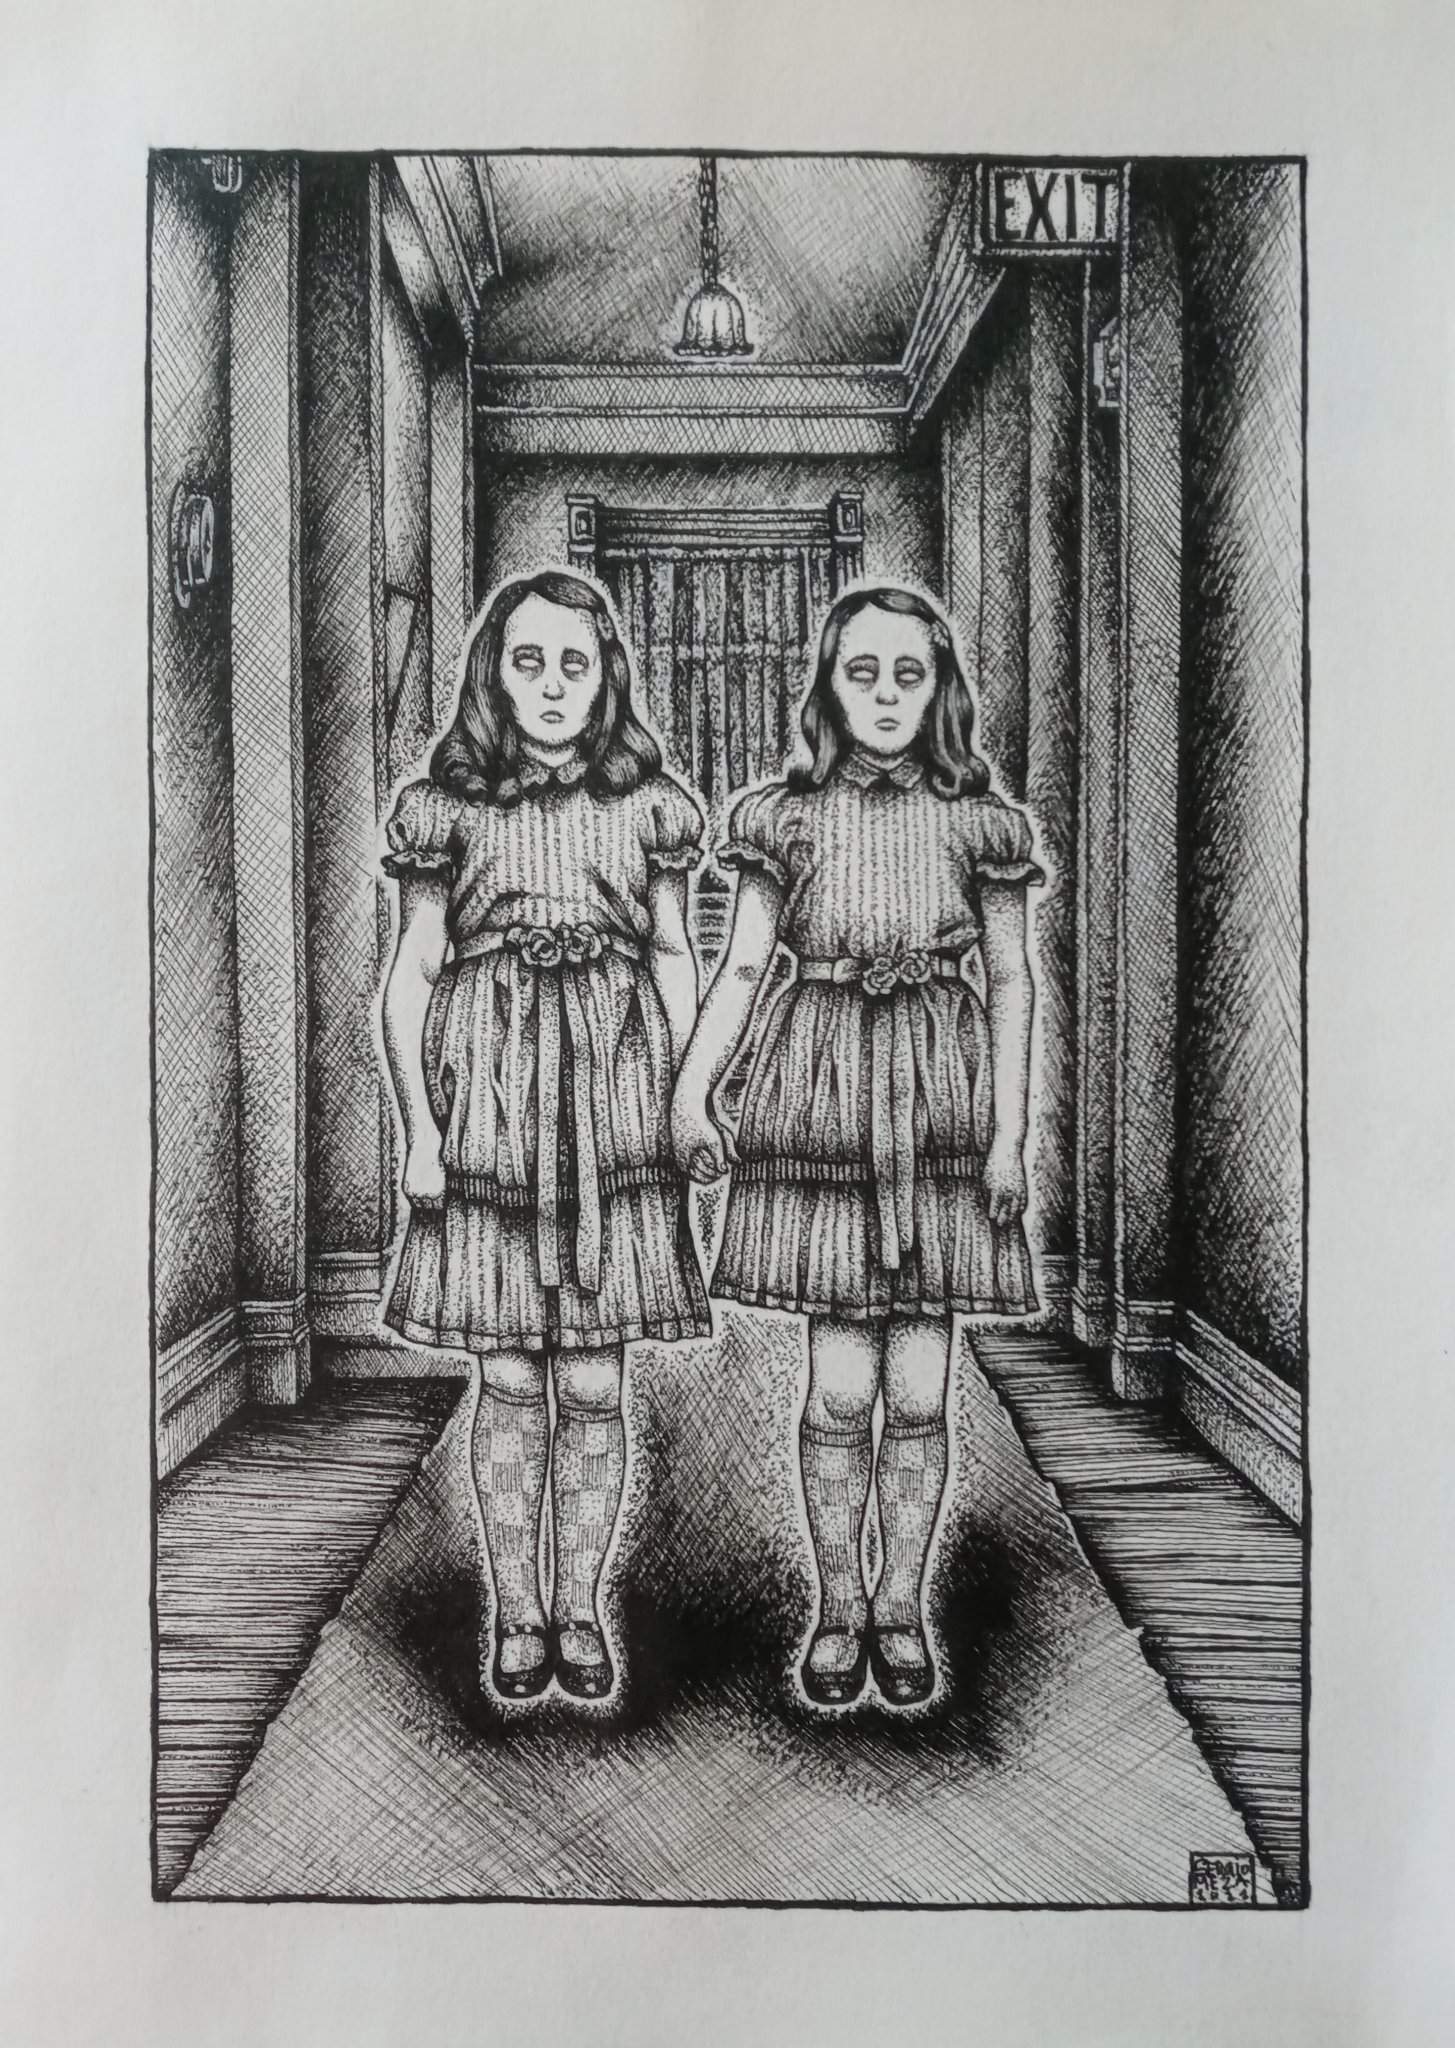 Junji Ito Inspired Art The Grady twins (The Shining) Micron Pen ink